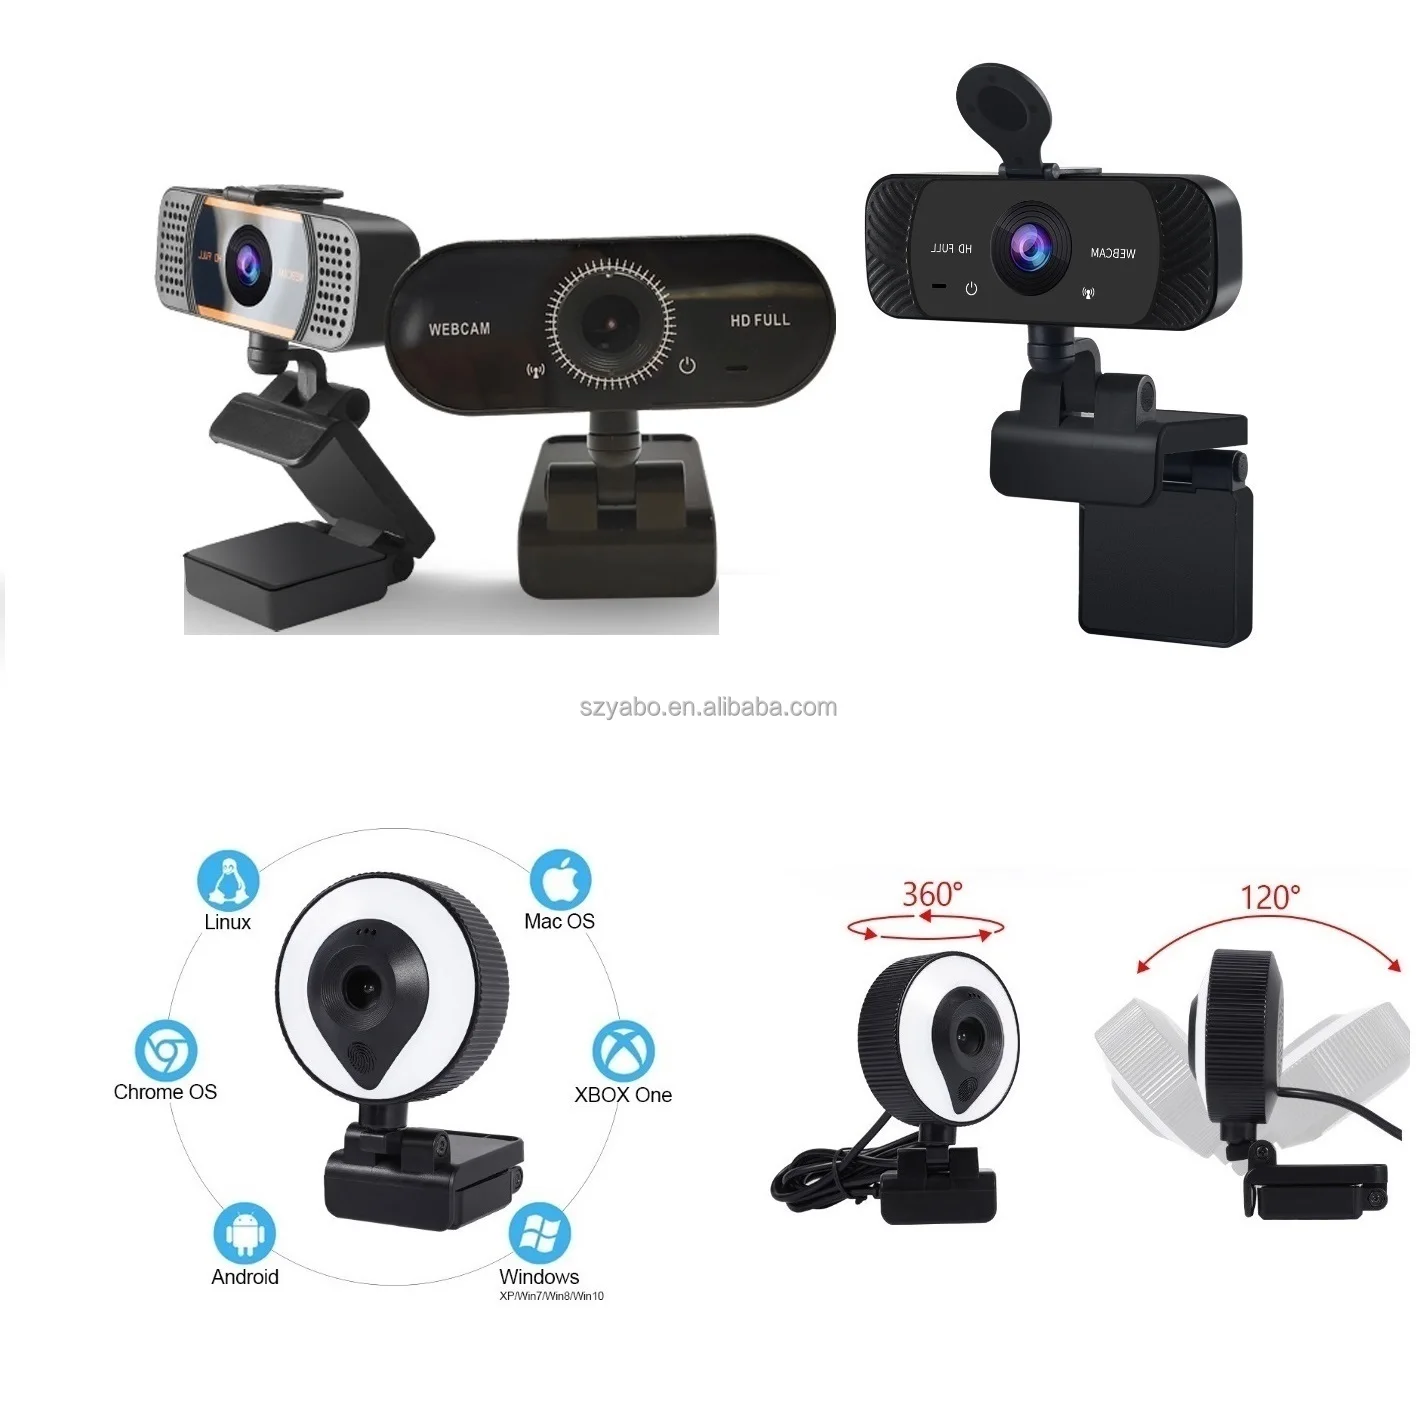 Usb 4k Web Cam With Microphone Autofocus For Pc Full Hd Web Camera 2k 4k 1080p Webcam Buy Webcam Web Camera Webcam 4k Web Cam Product On Alibaba Com